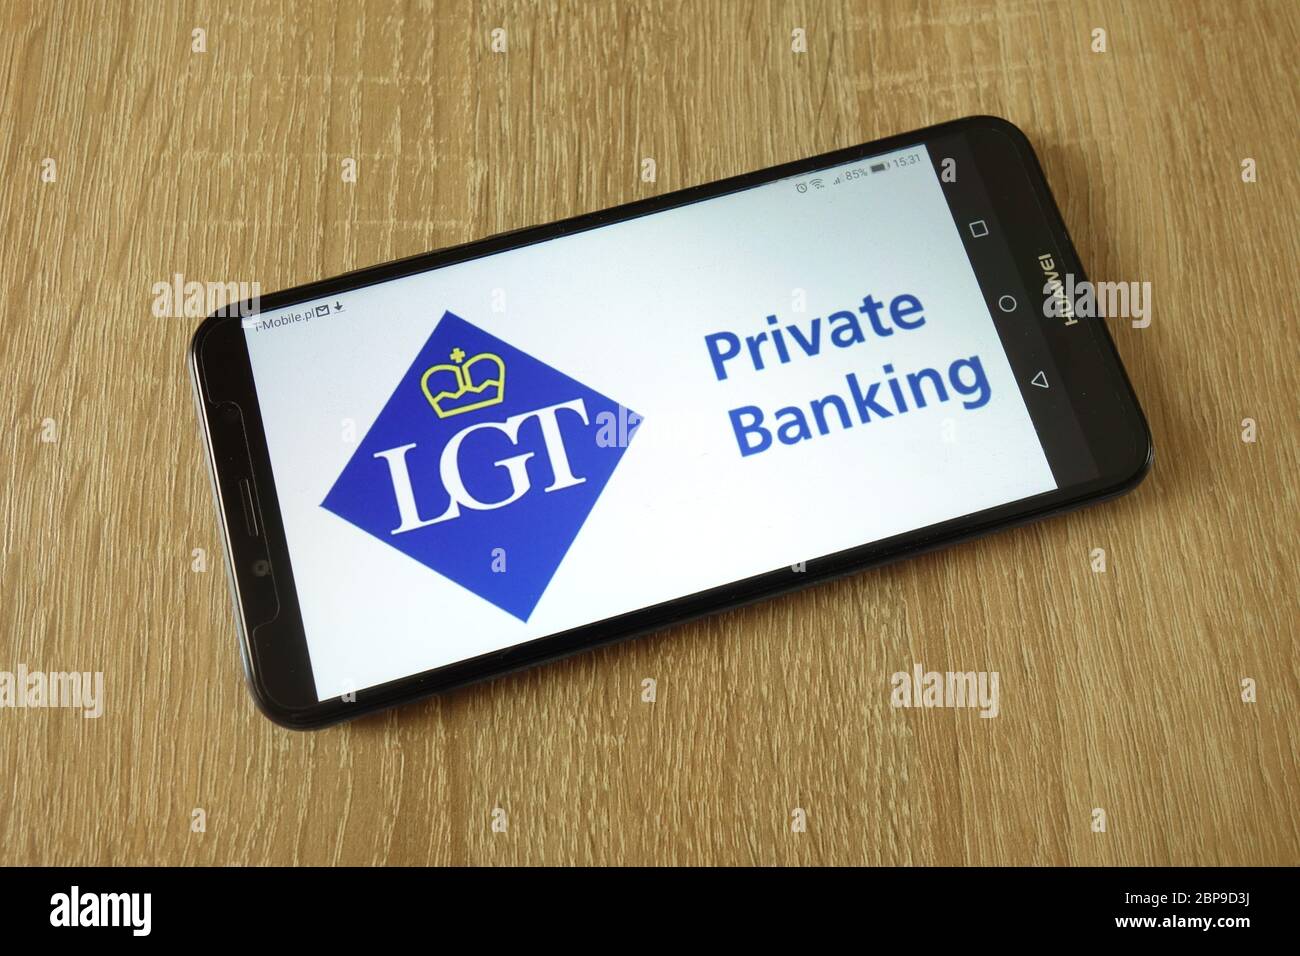 LGT Group logo displayed on smartphone Stock Photo